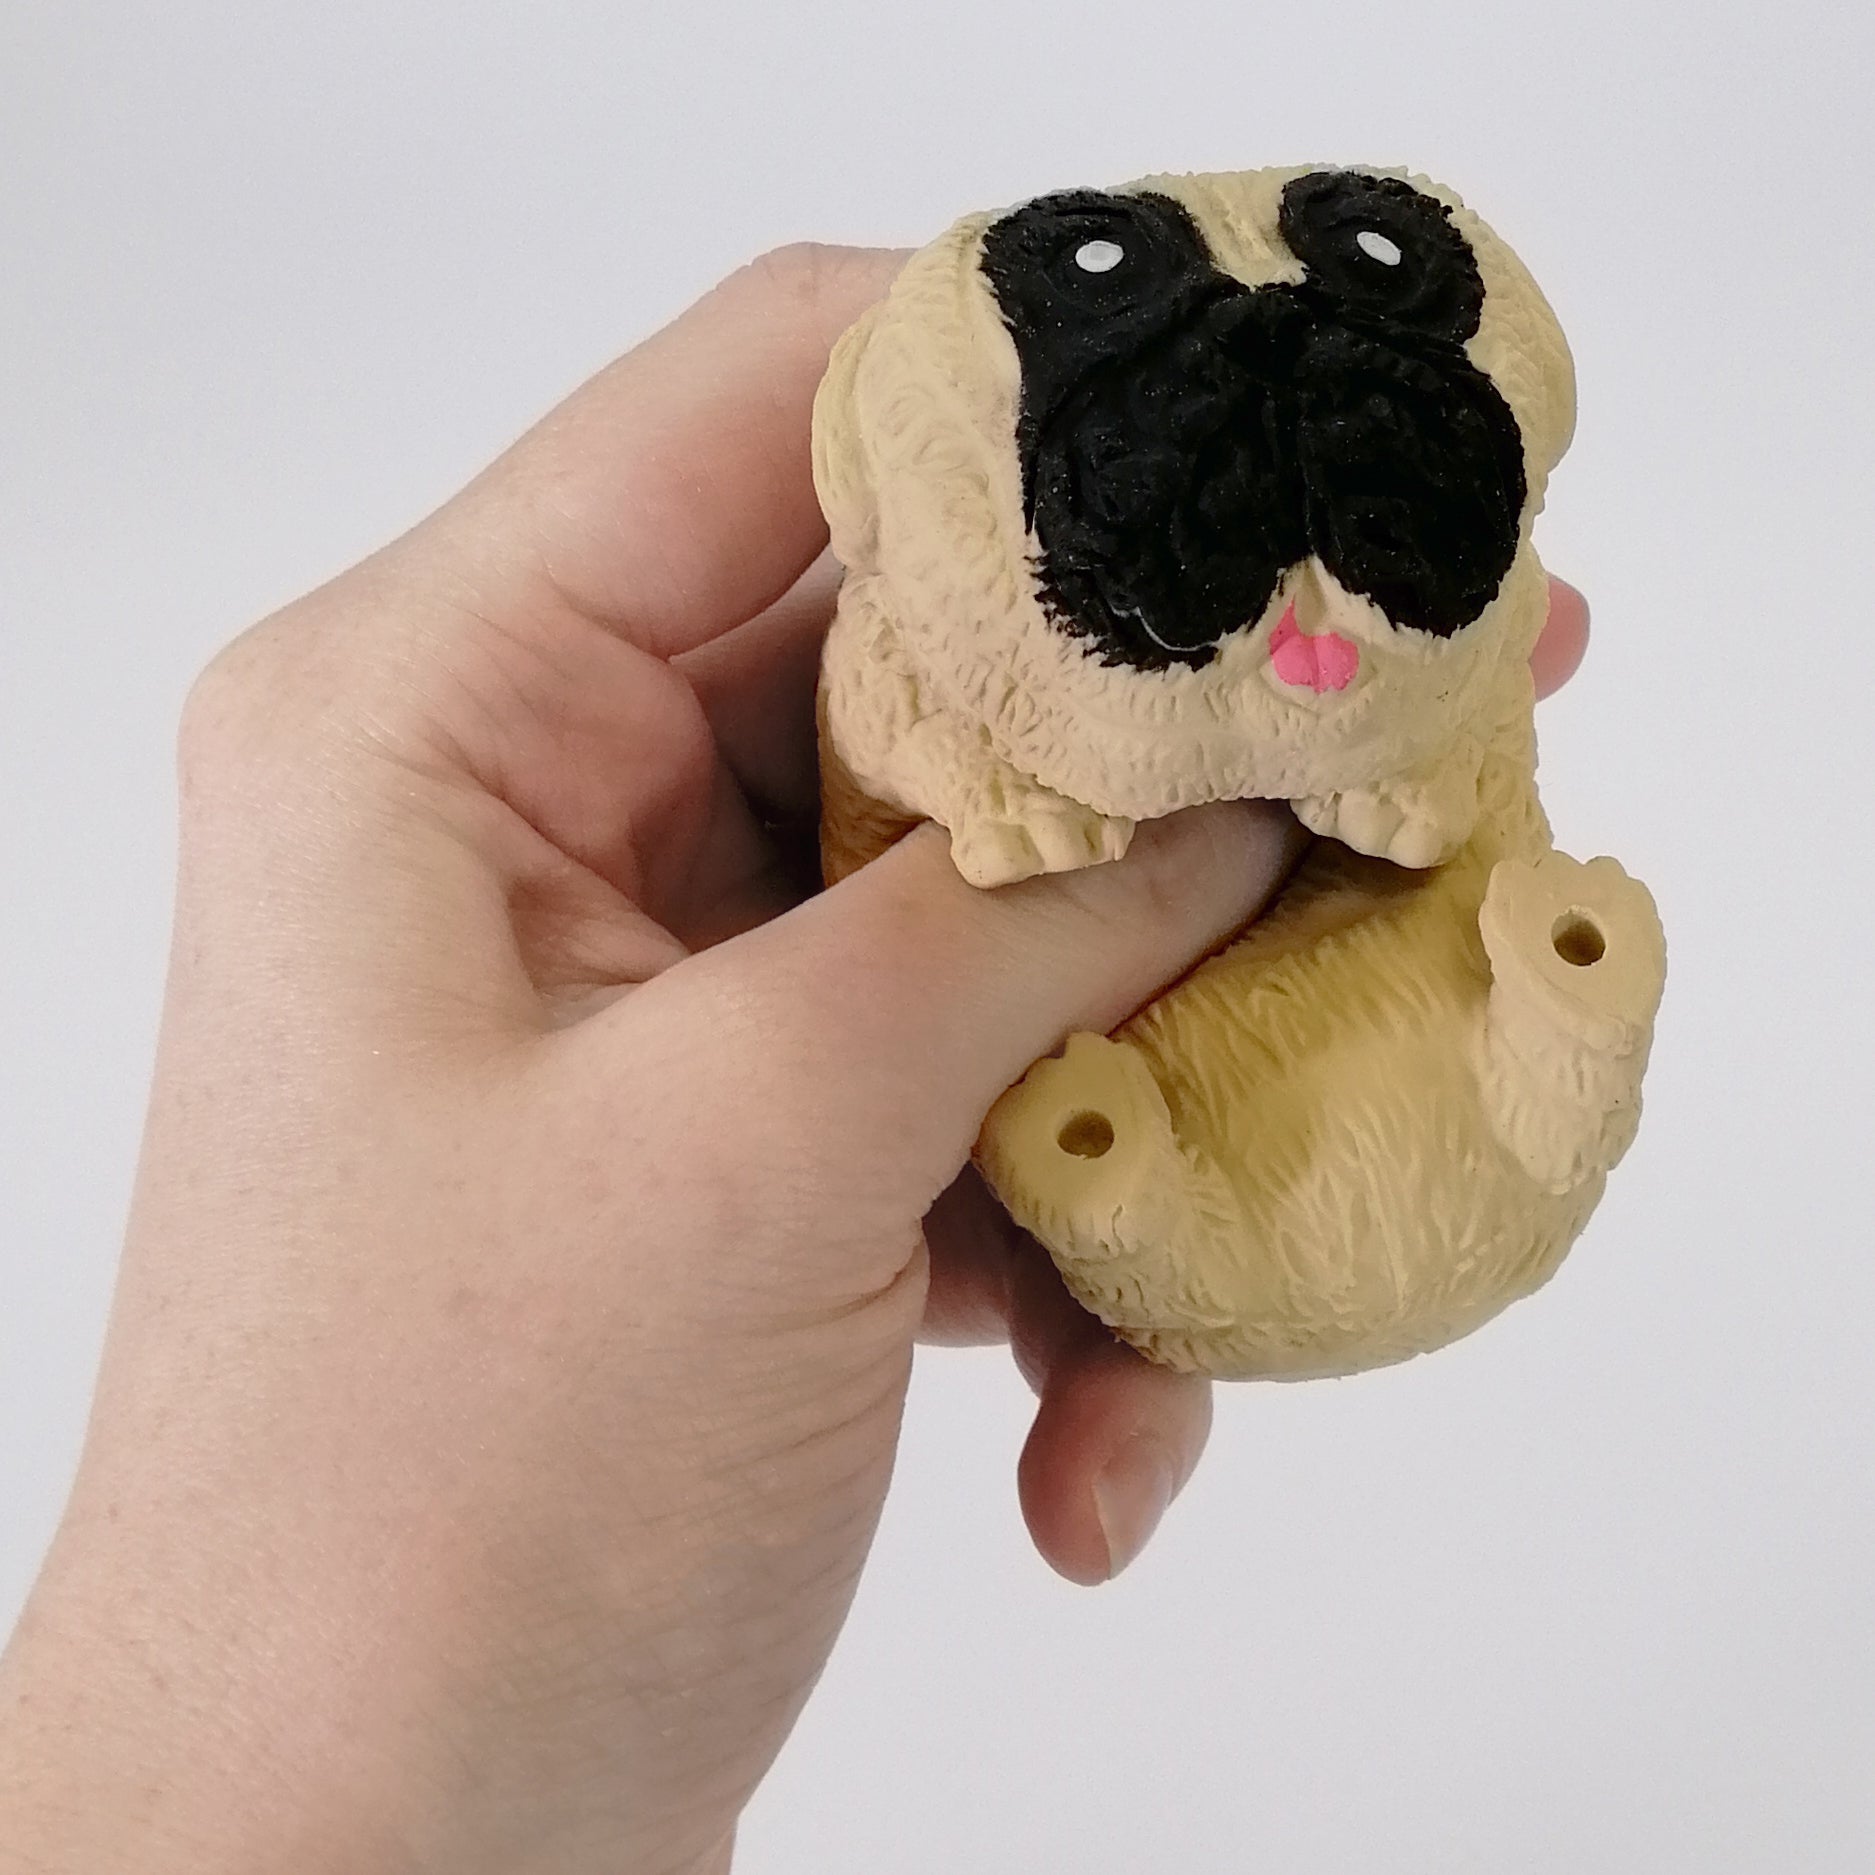 Squishy Pug - Stress Toy